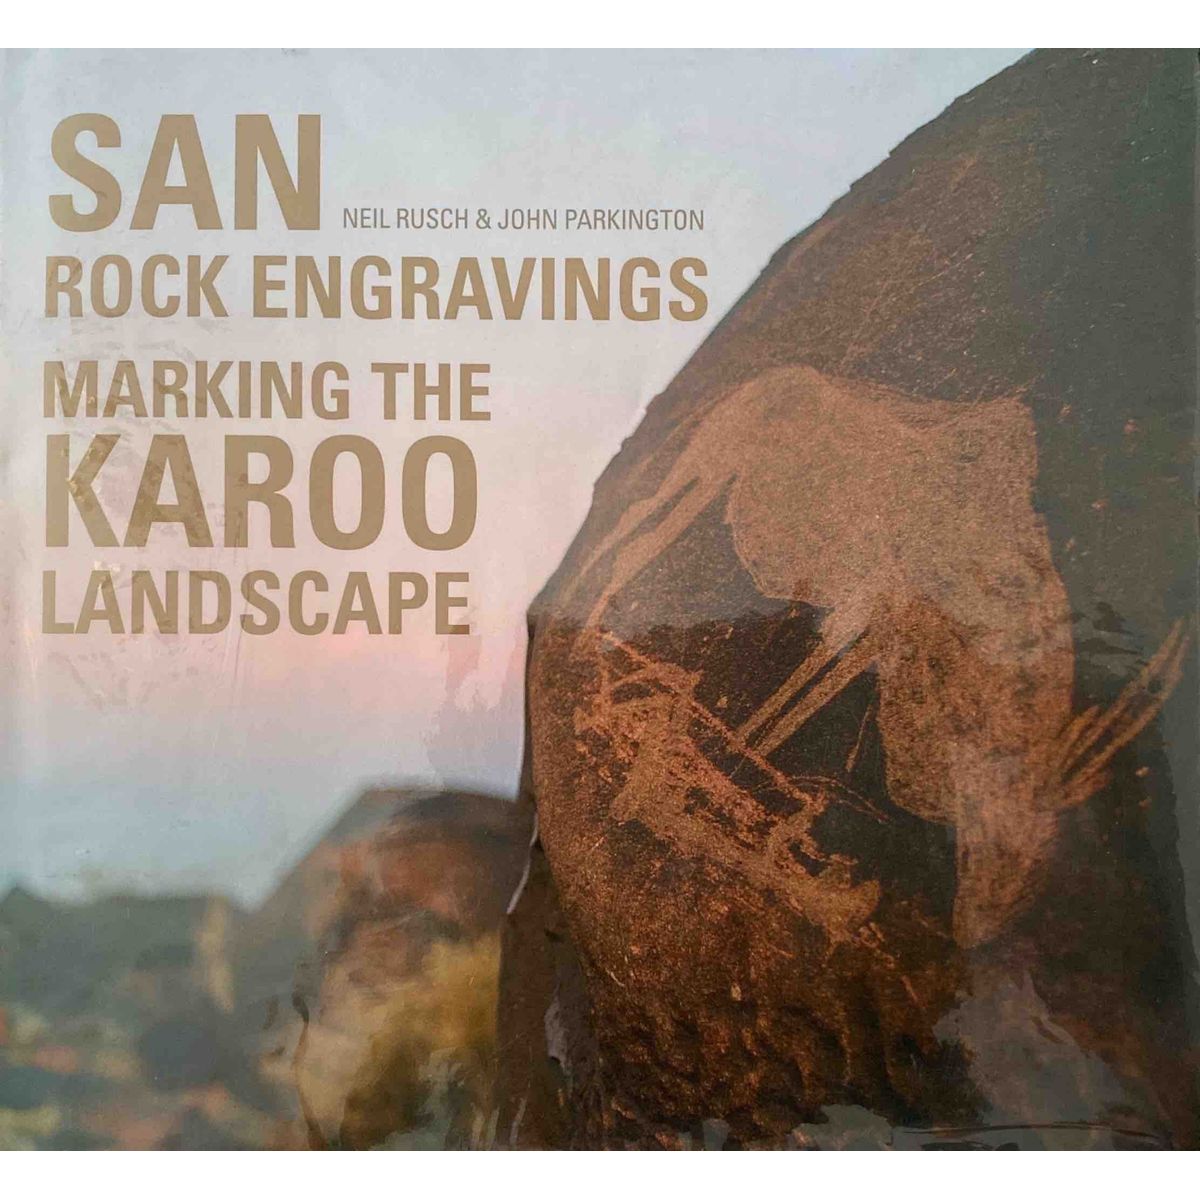 ISBN: 9781770078154 / 1770078150 - San Rock Engravings: Marking the Karoo Landscape by Neil Rush & John Parkington [2010]